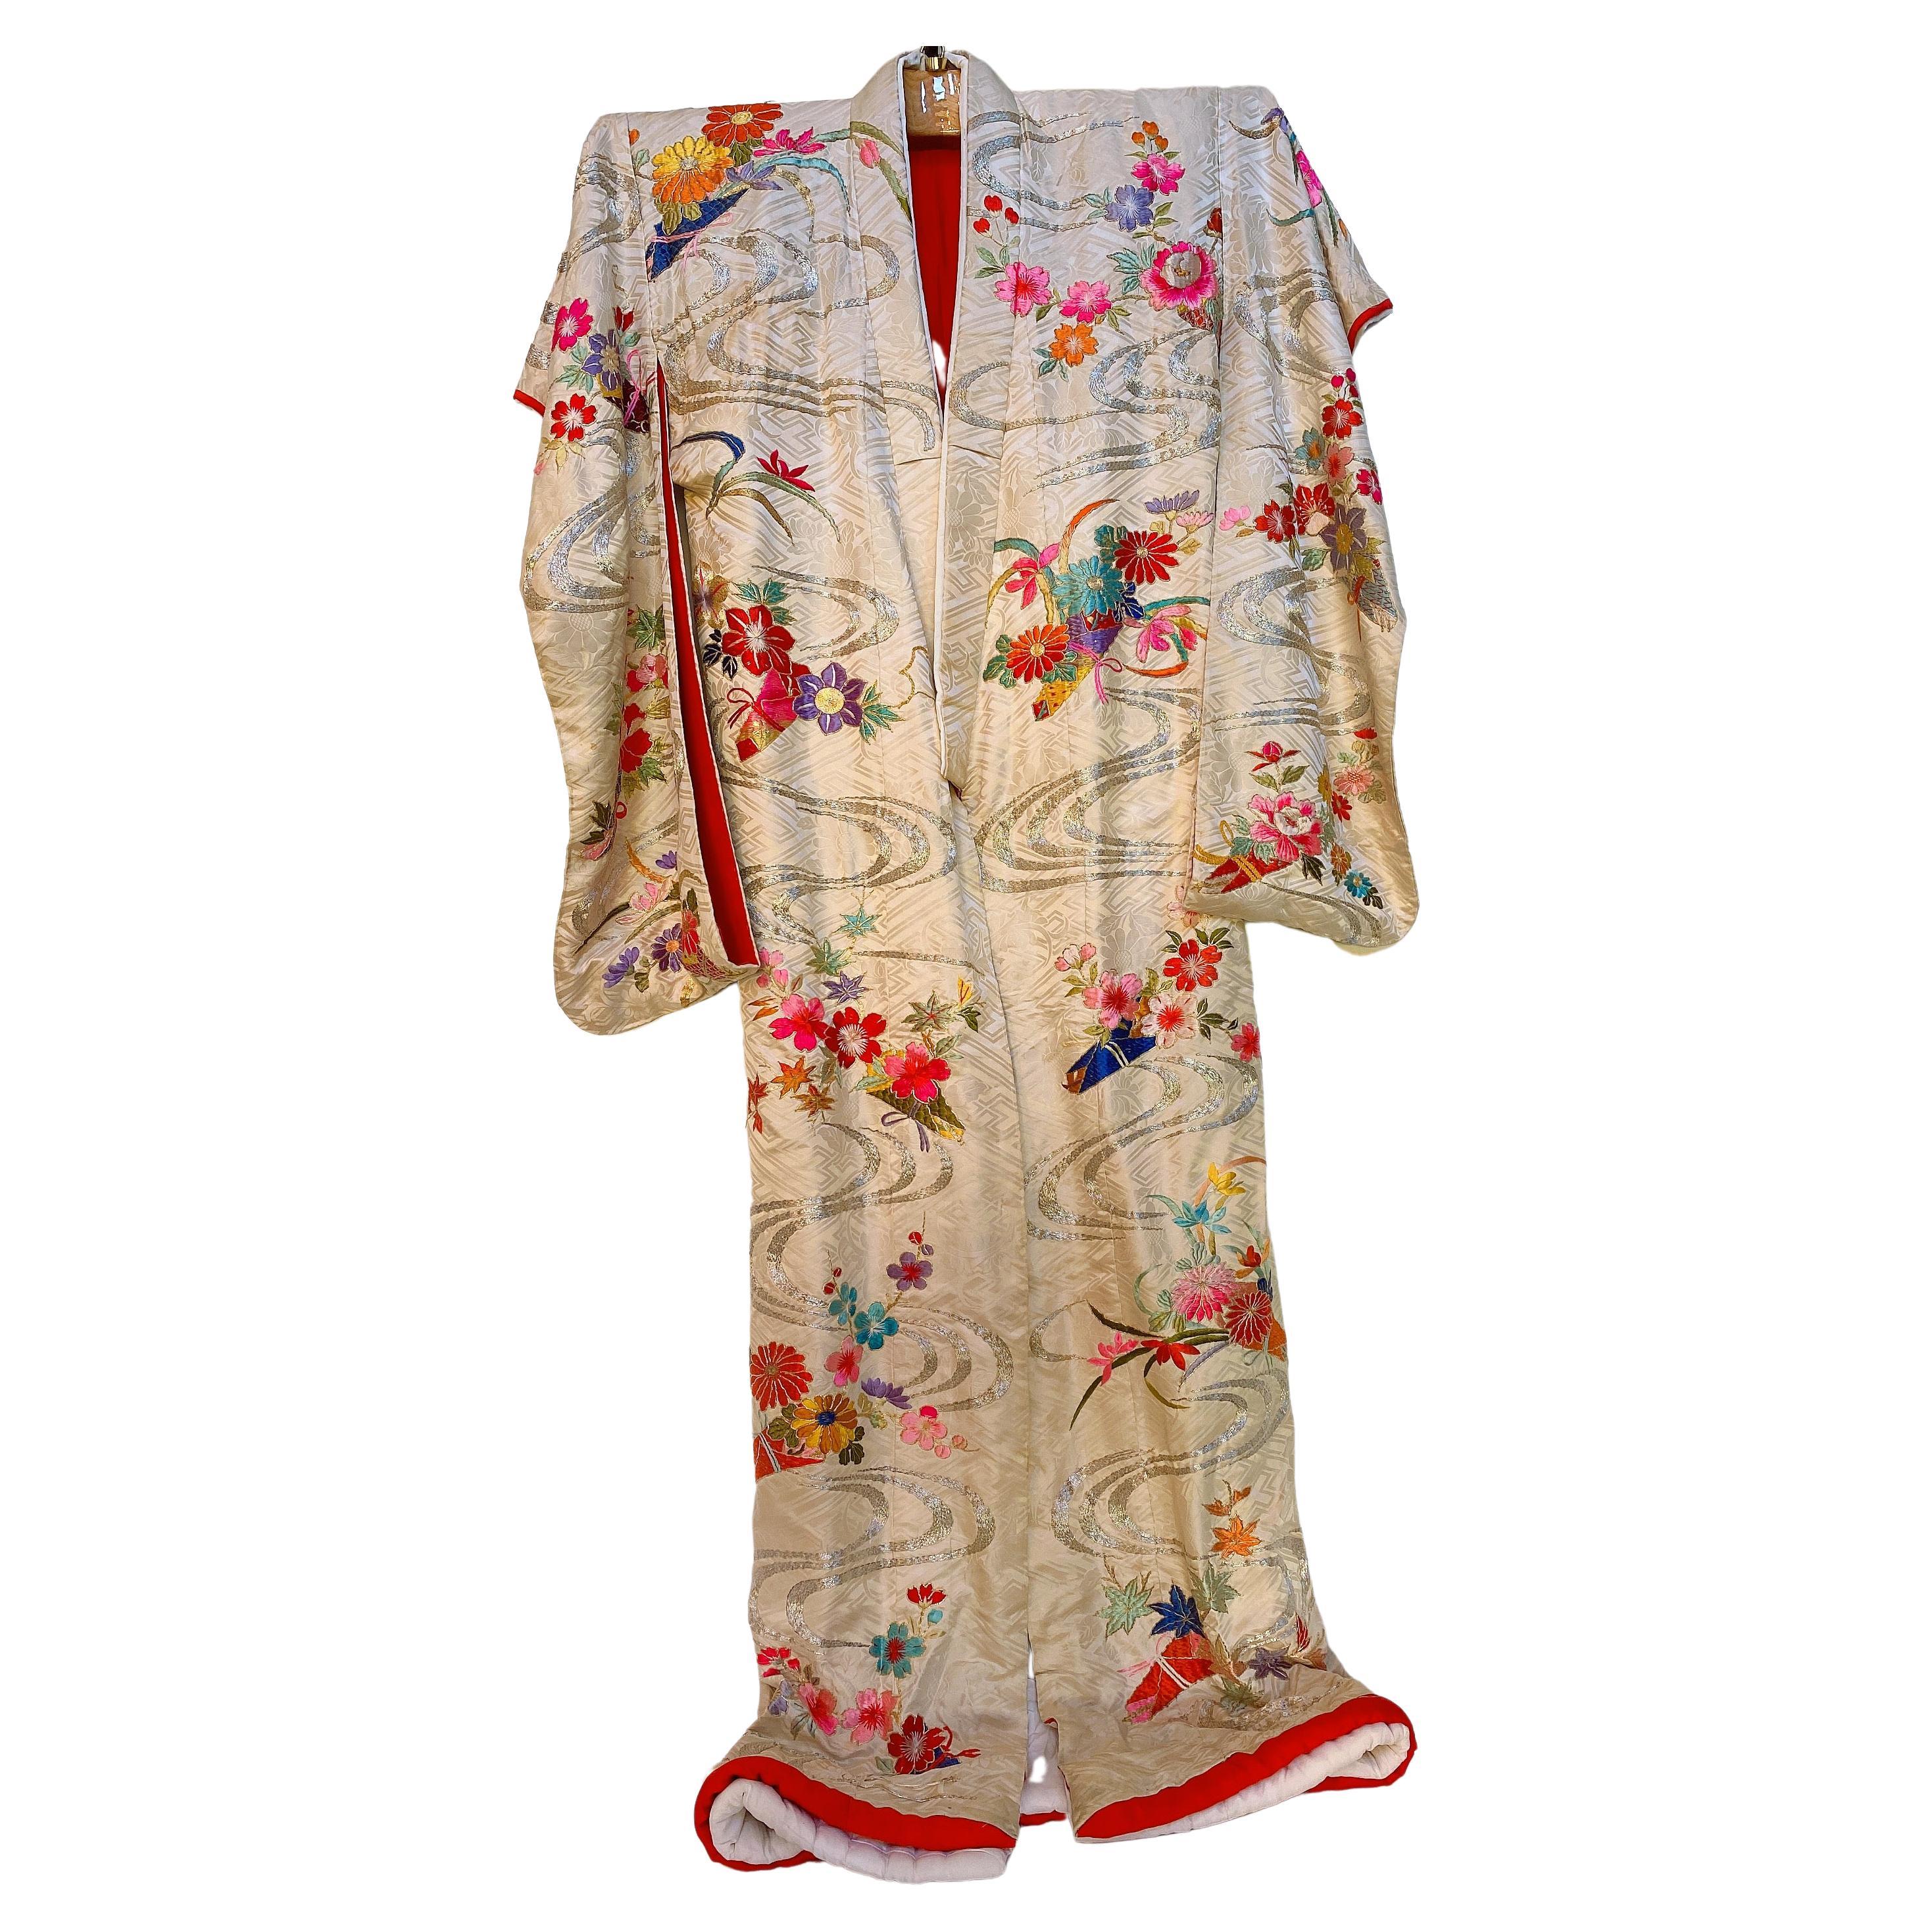 Raro y espectacular Kimono Japonés de Seda Bordado a Mano